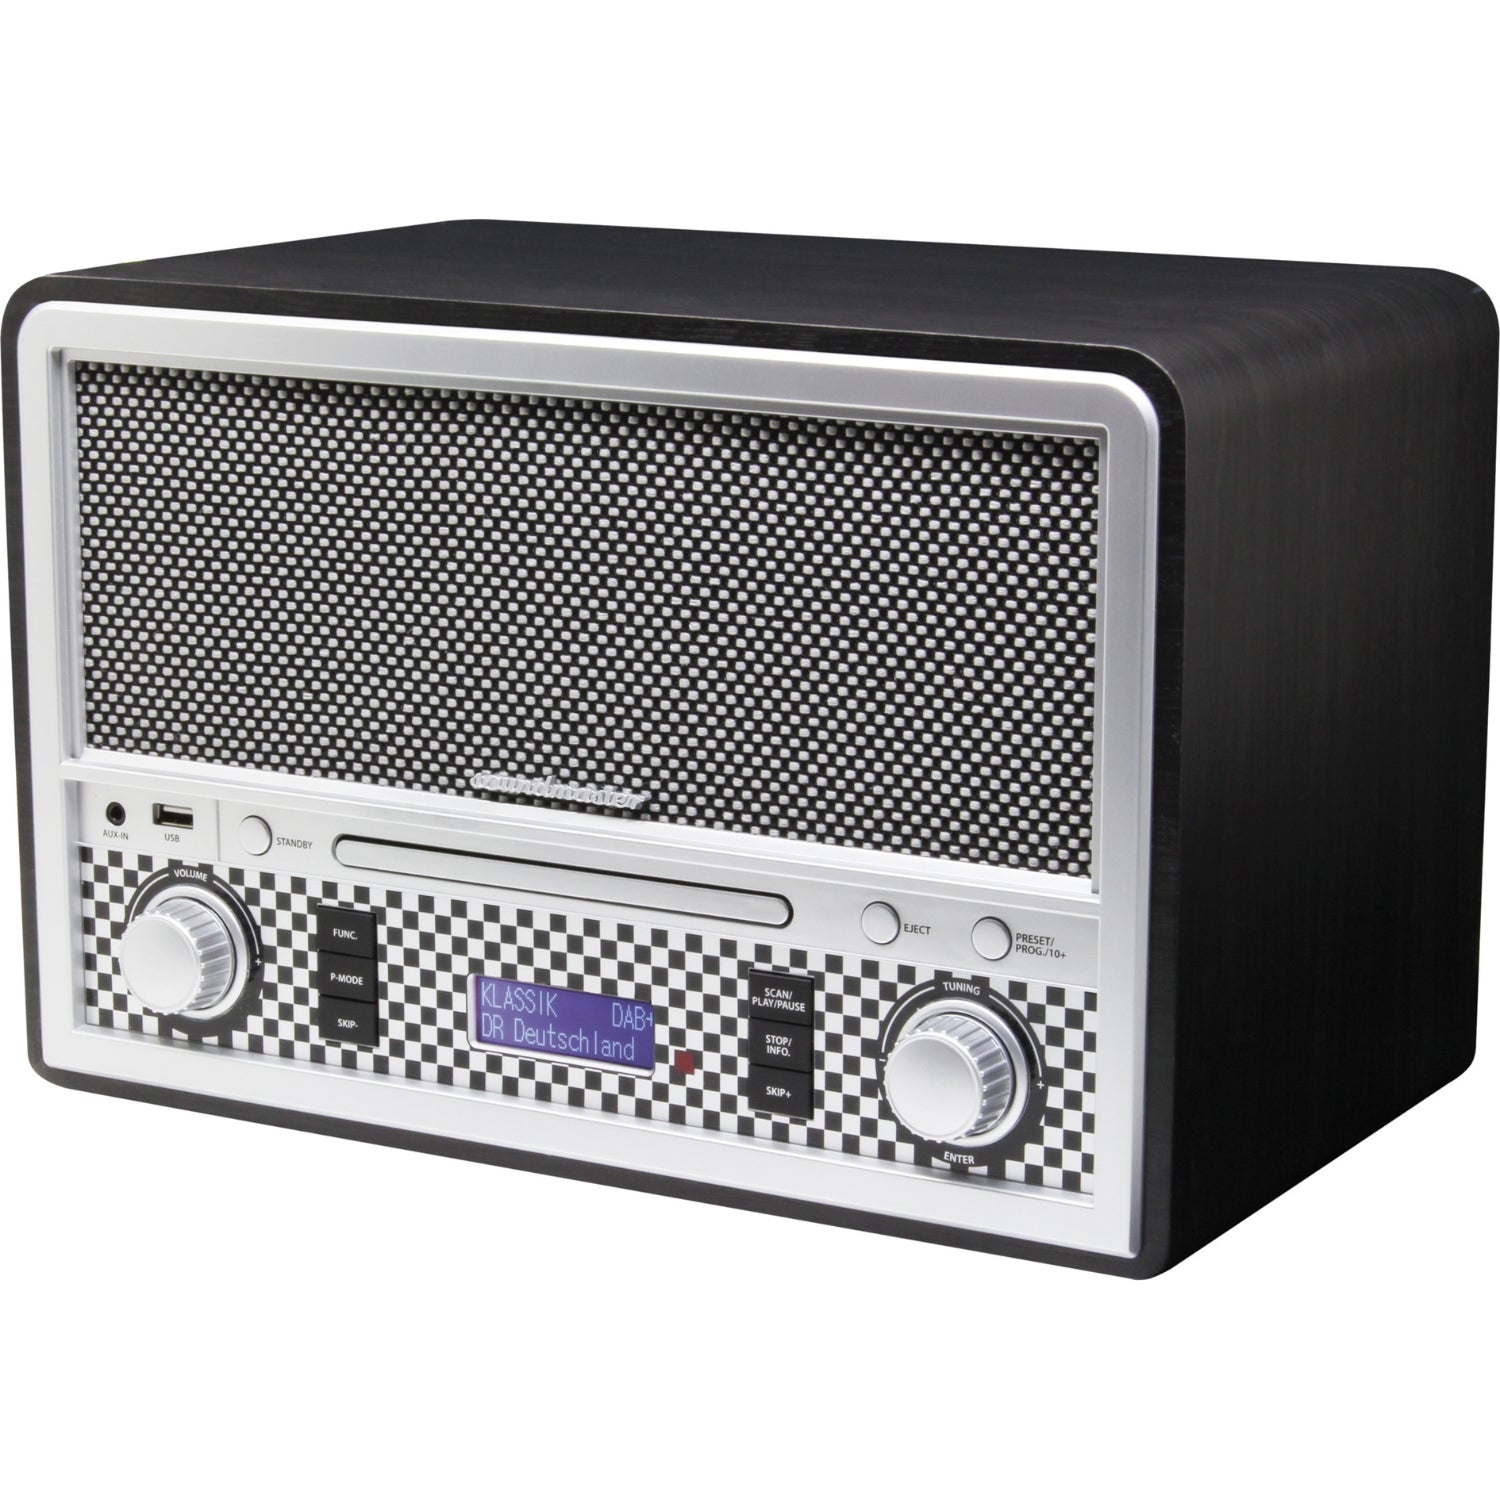 Soundmaster HighLine NR955SW Retro Kompaktanlage CD-Player Digitalradio DAB+ UKW USB AUX Bluetooth